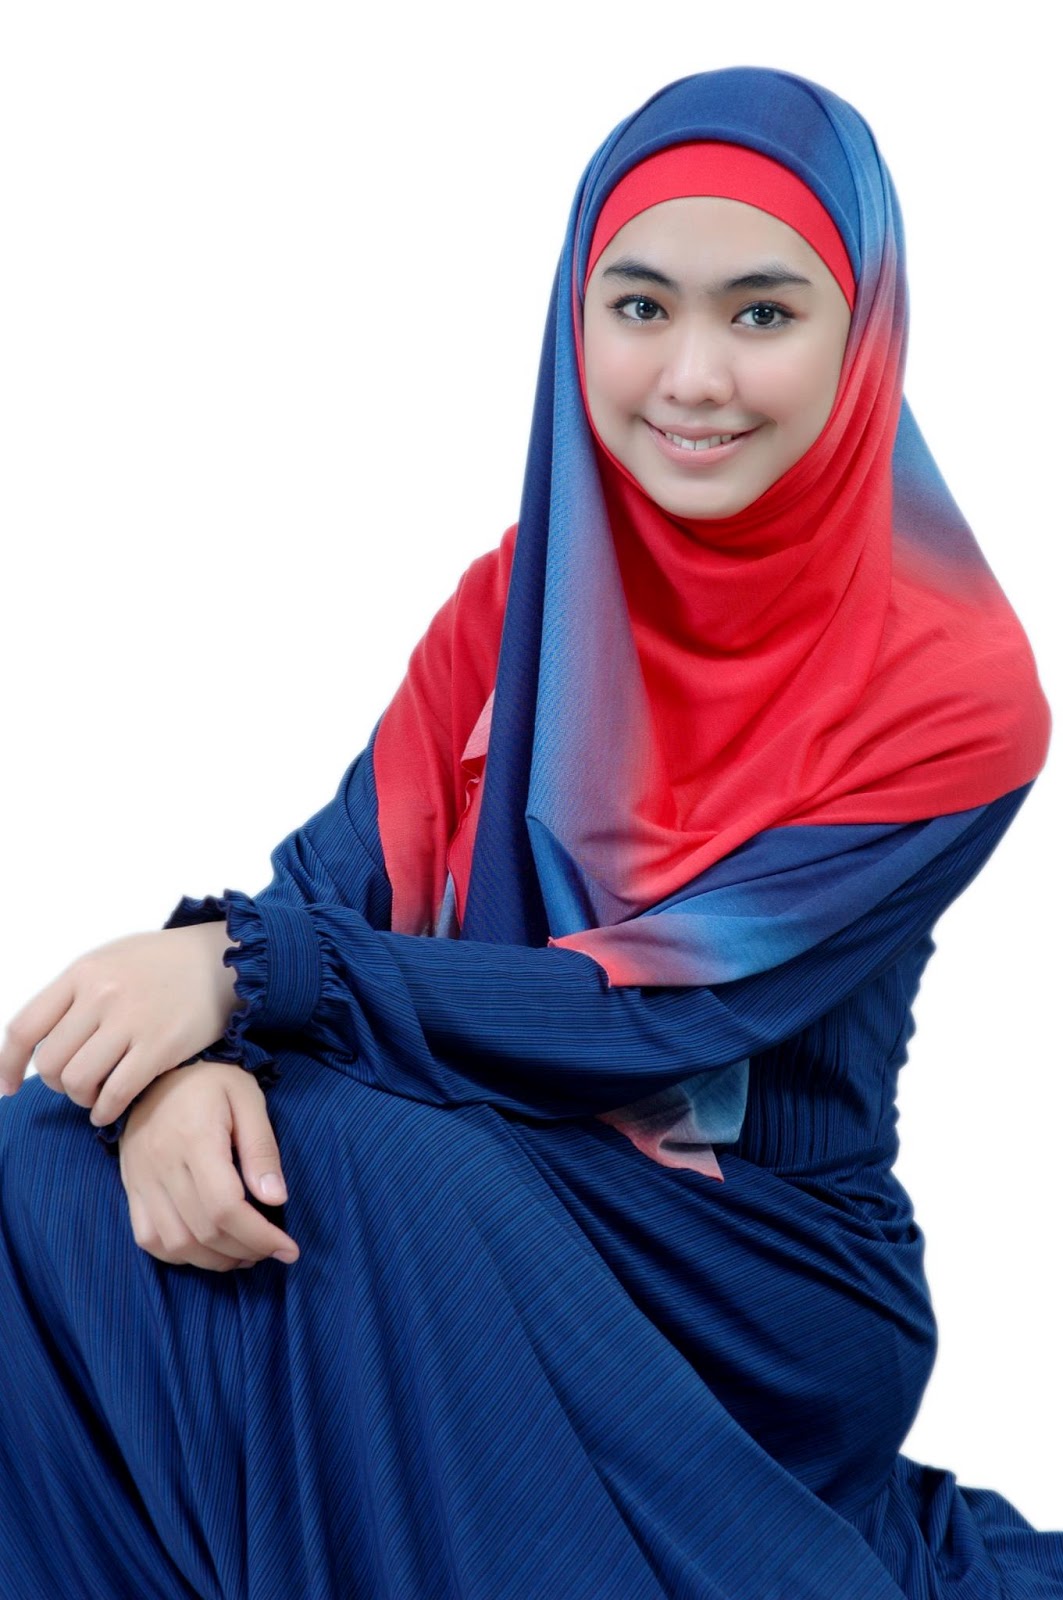 Oki Setiana Dewi - Berjilbab Itu Cantik - Profil / Biodata 